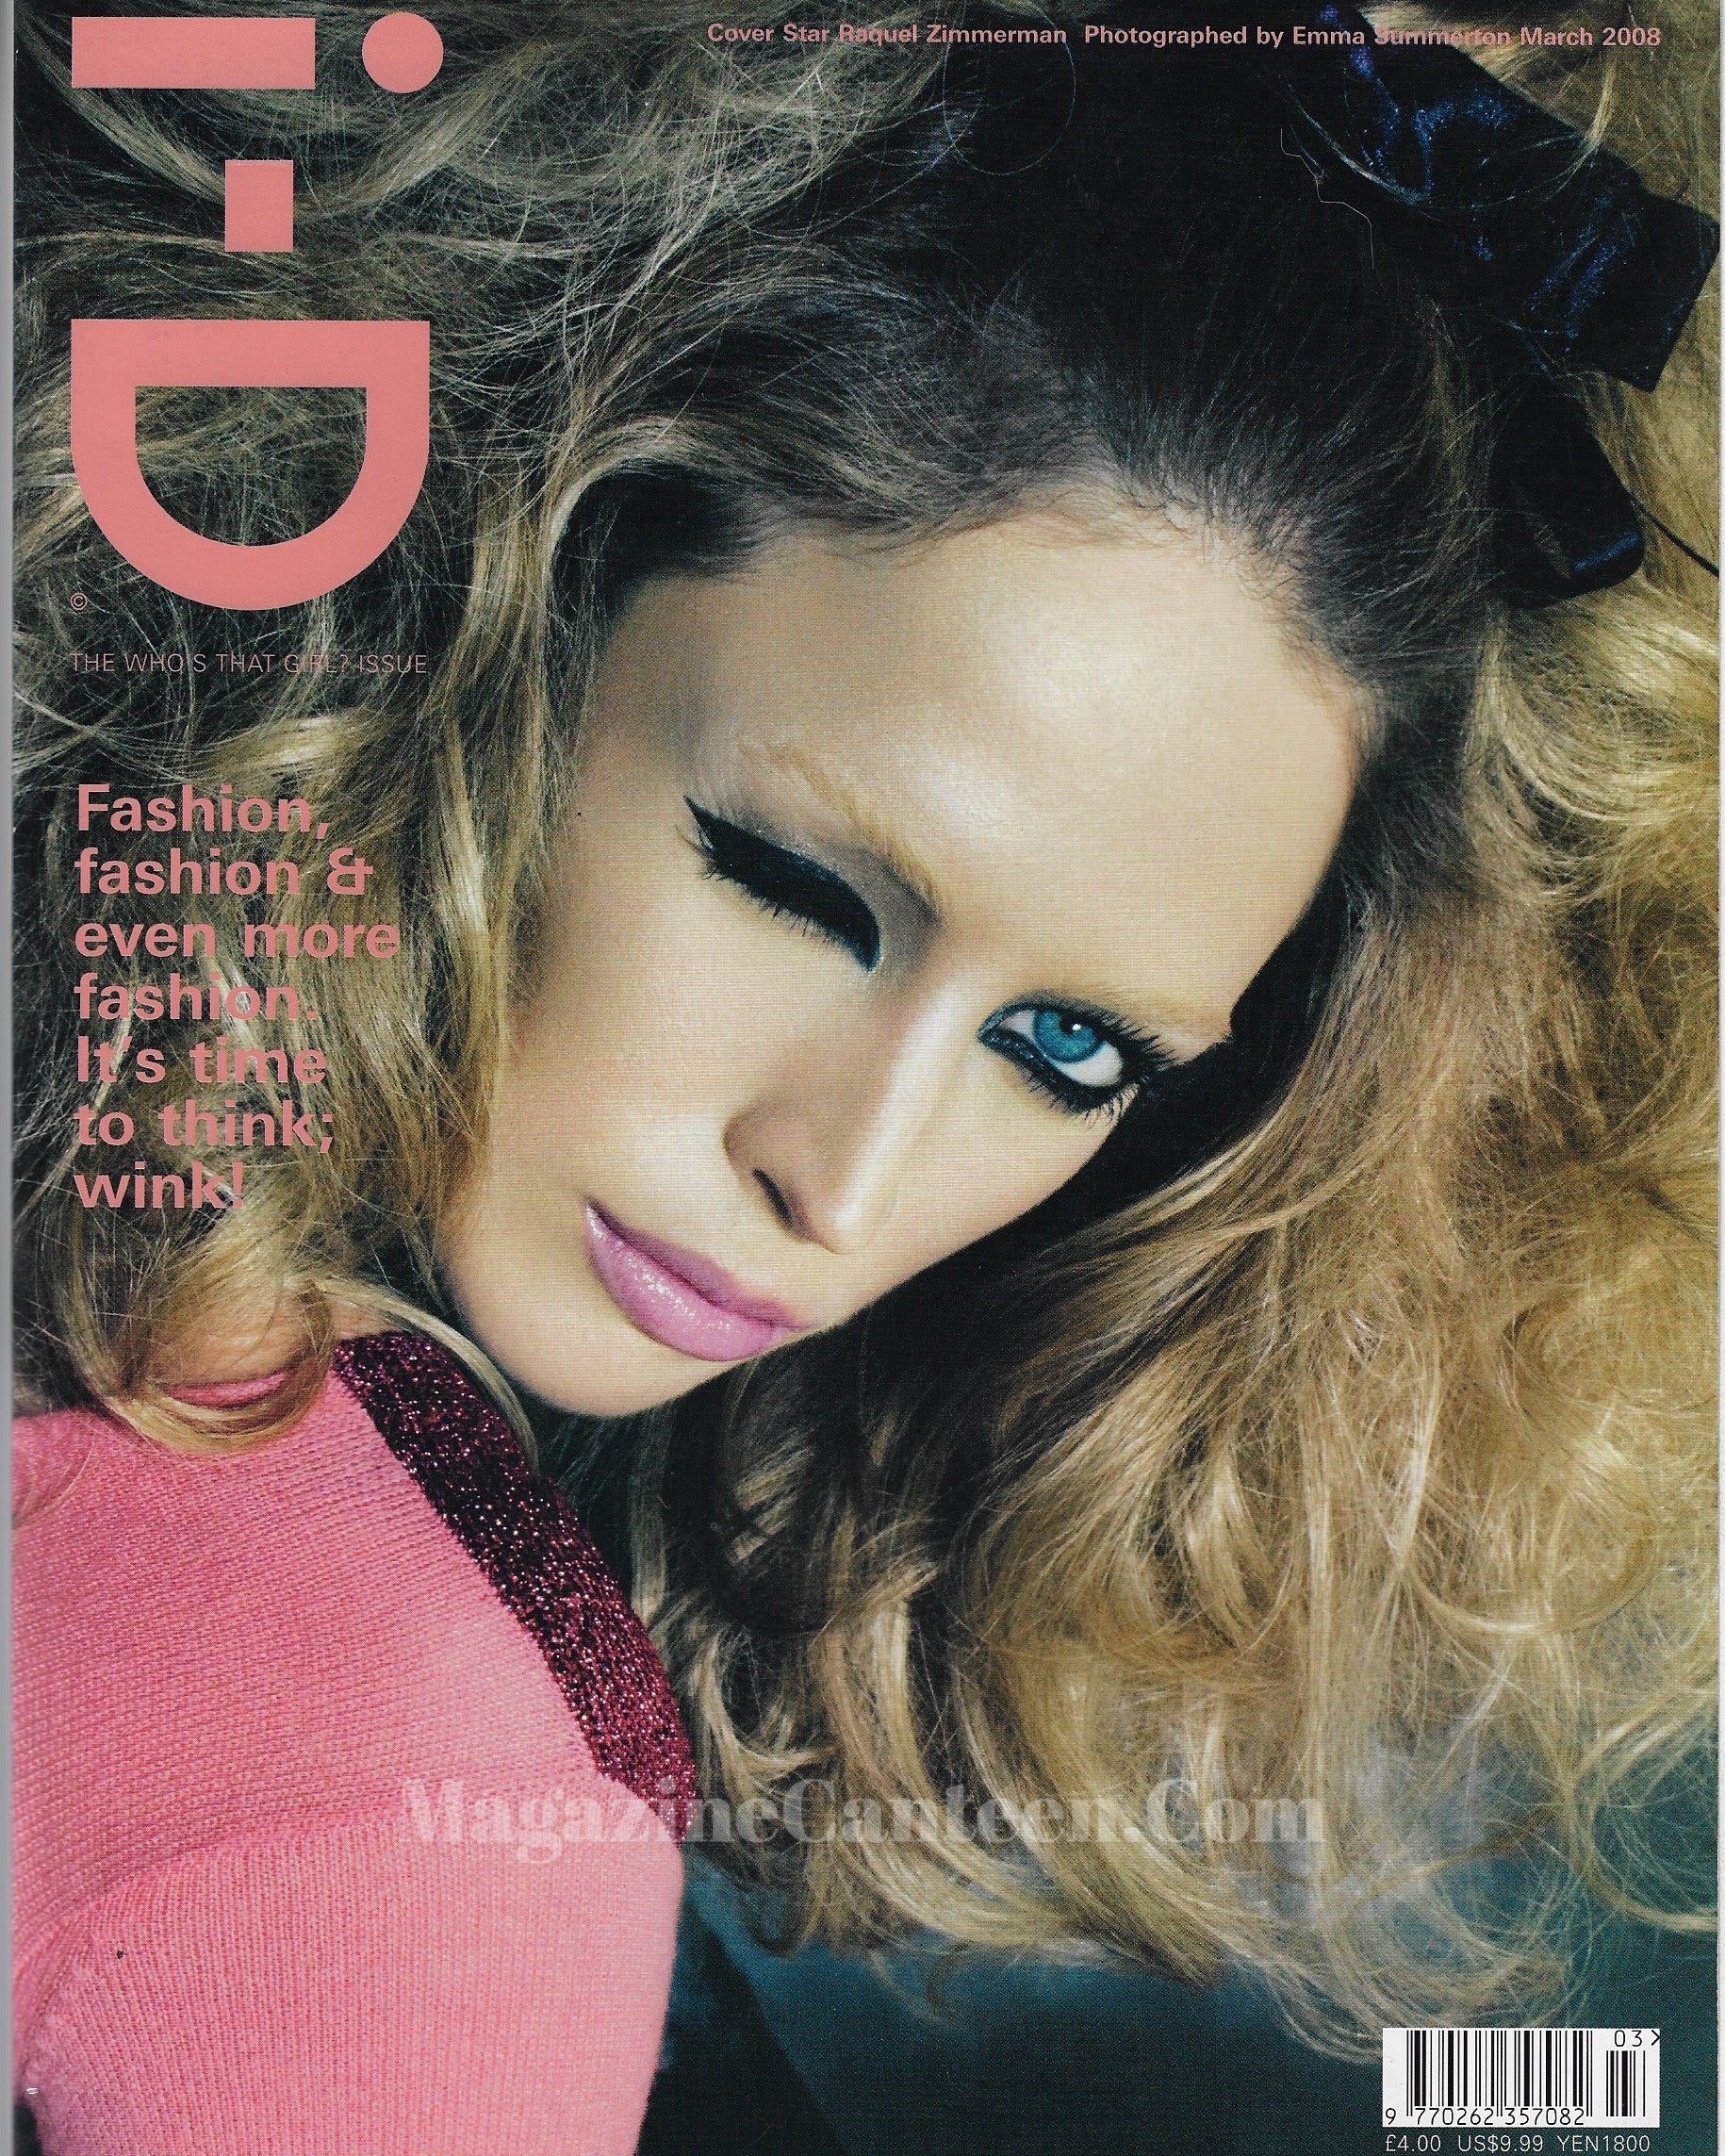 I-D Magazine 285 - Raquel Zimmerman 2008